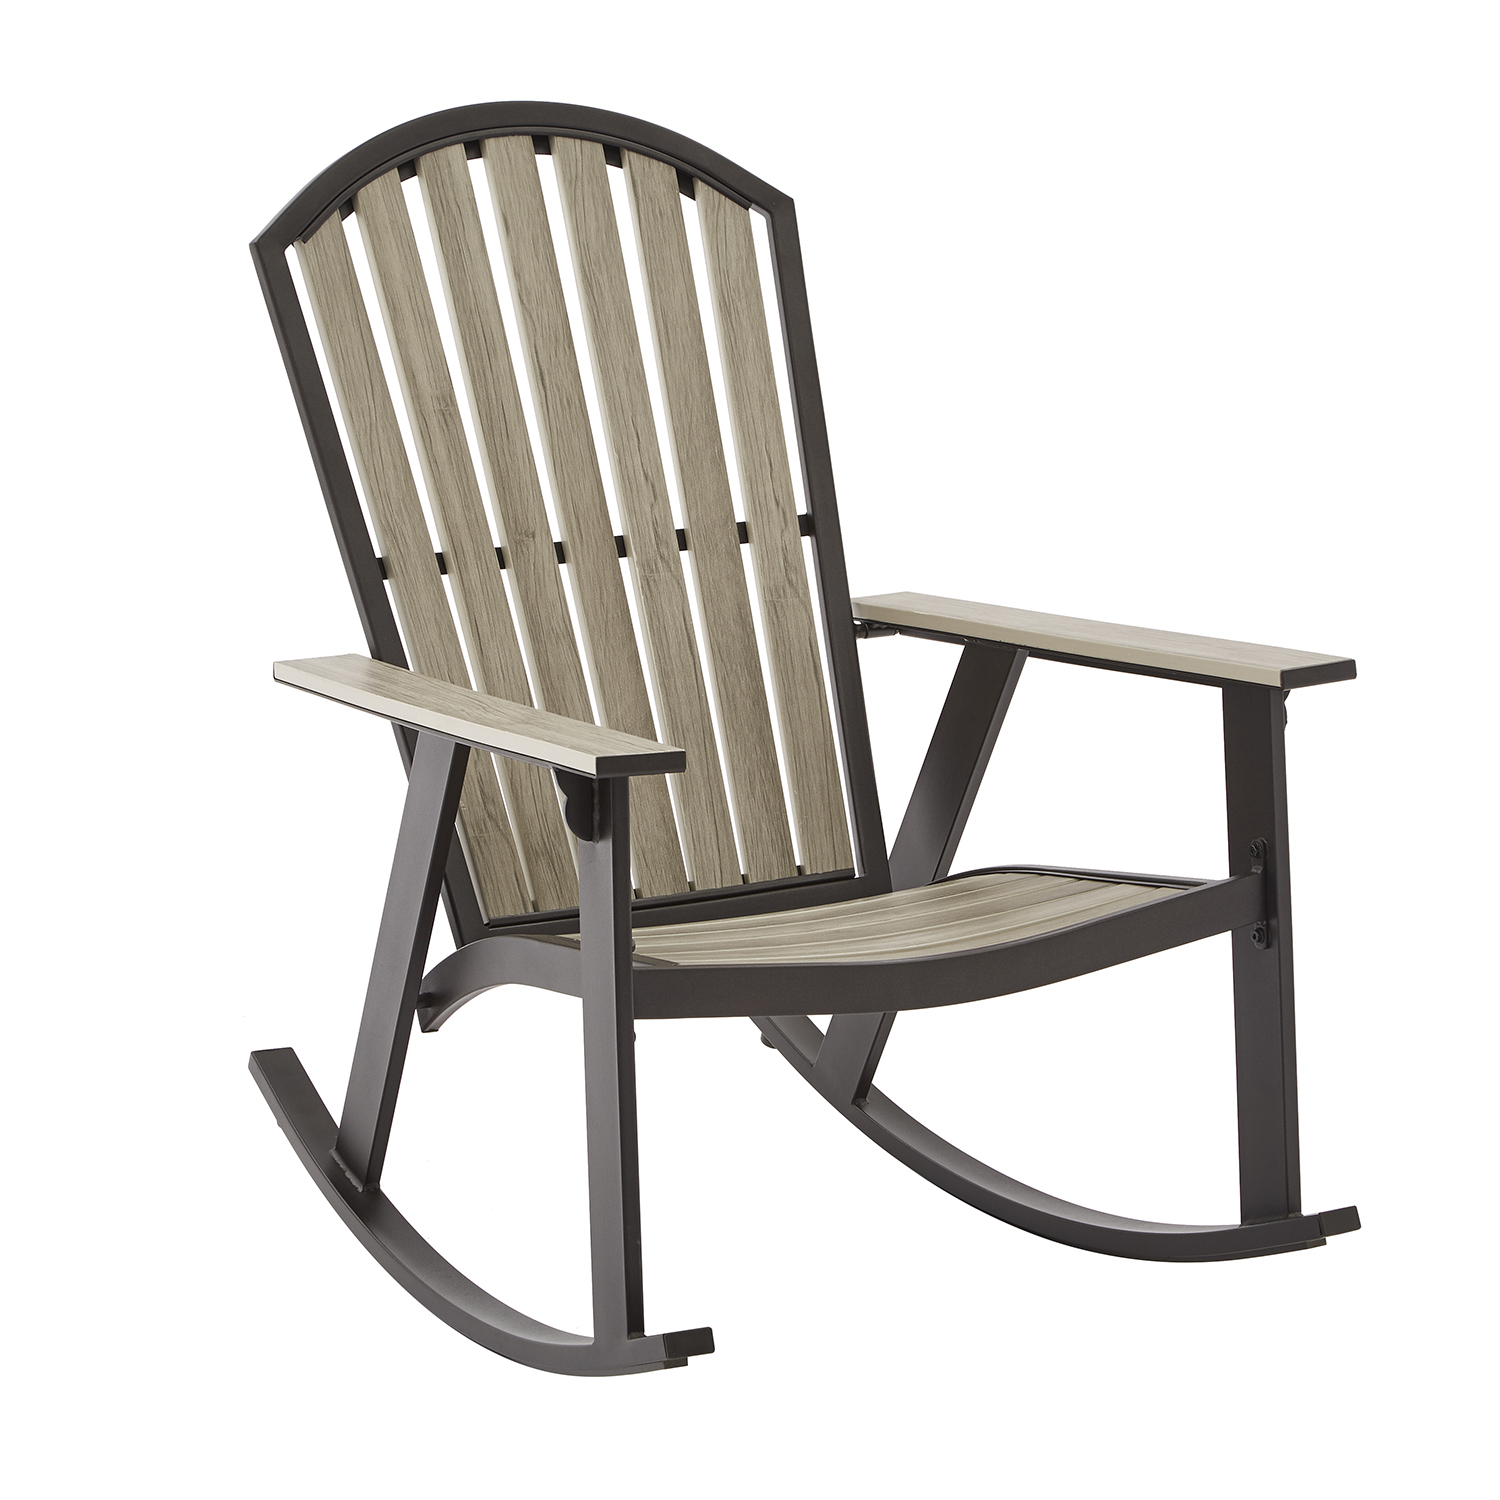 Mainstays Springview Hills Resin Outdoor Adirondack Rocking Chair - image 2 of 5